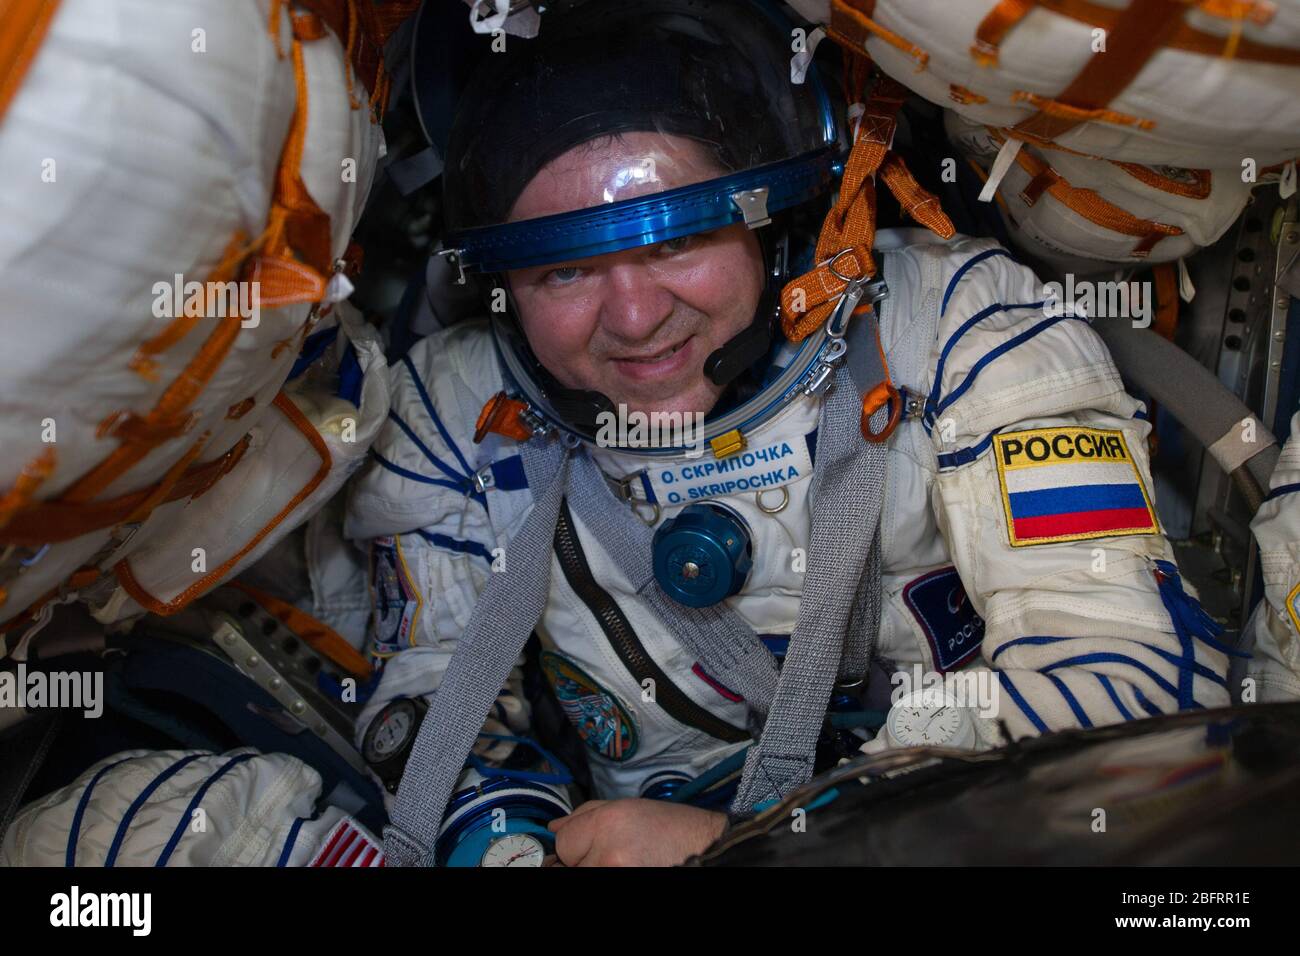 ZHEZKAZGAN, KAZAKHSTAN - 17 April 2020 - Expedition 62 crew member Oleg Skripochka of Roscosmos smiles after he and NASA astronauts Andrew Morgan and Stock Photo